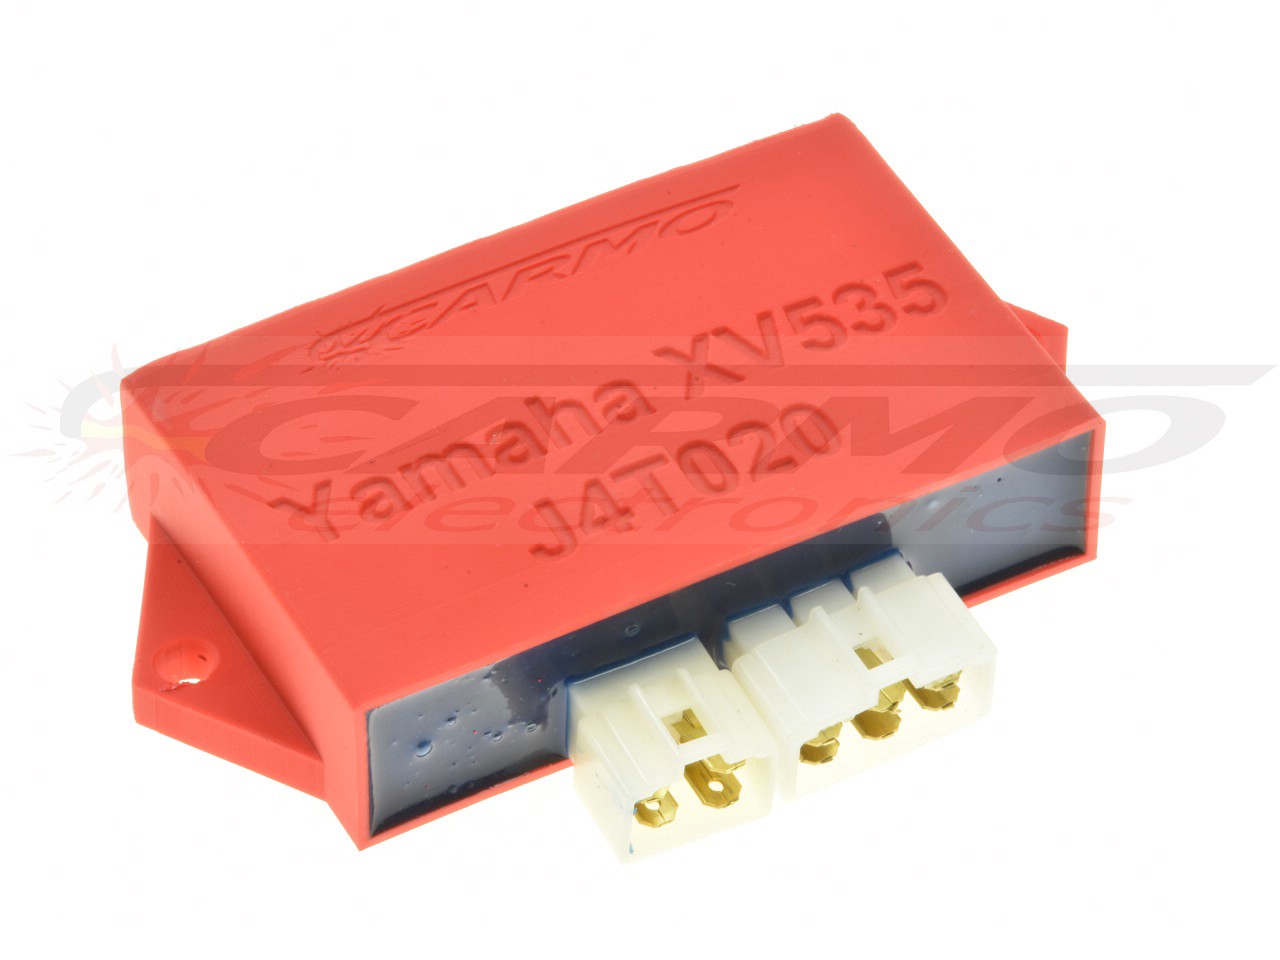 Yamaha XV535 XV 535 Virago igniter ignition module CDI TCI Box (J4T020, 2GV-82305-20) - Clique na Imagem para Fechar